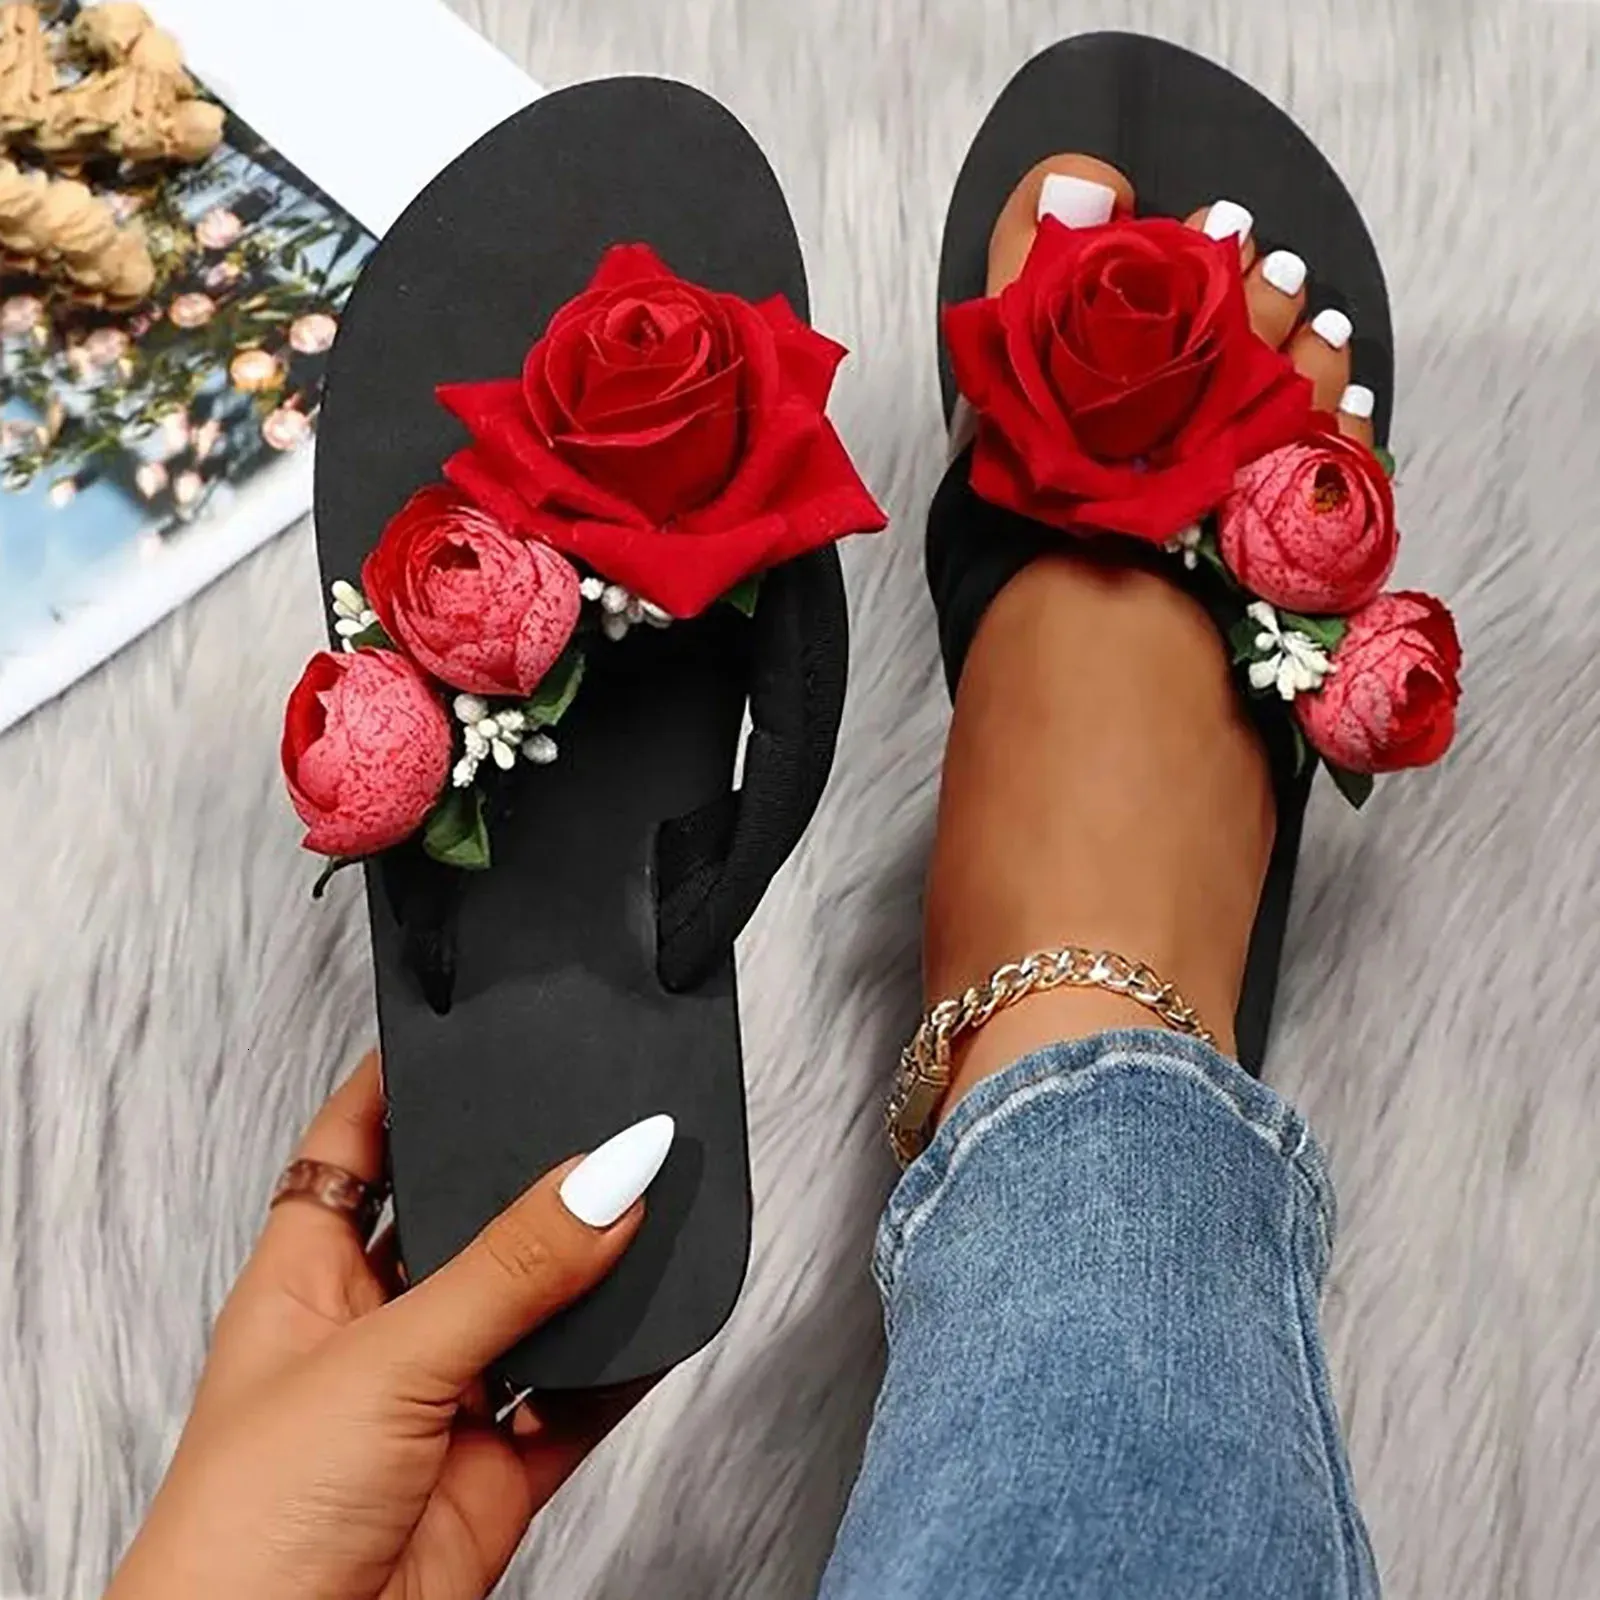 Slippers For Women Ladies Summer Flip Flops Open Toe Flowers Bohemian S Sandals Size 6 Leather 12 240320